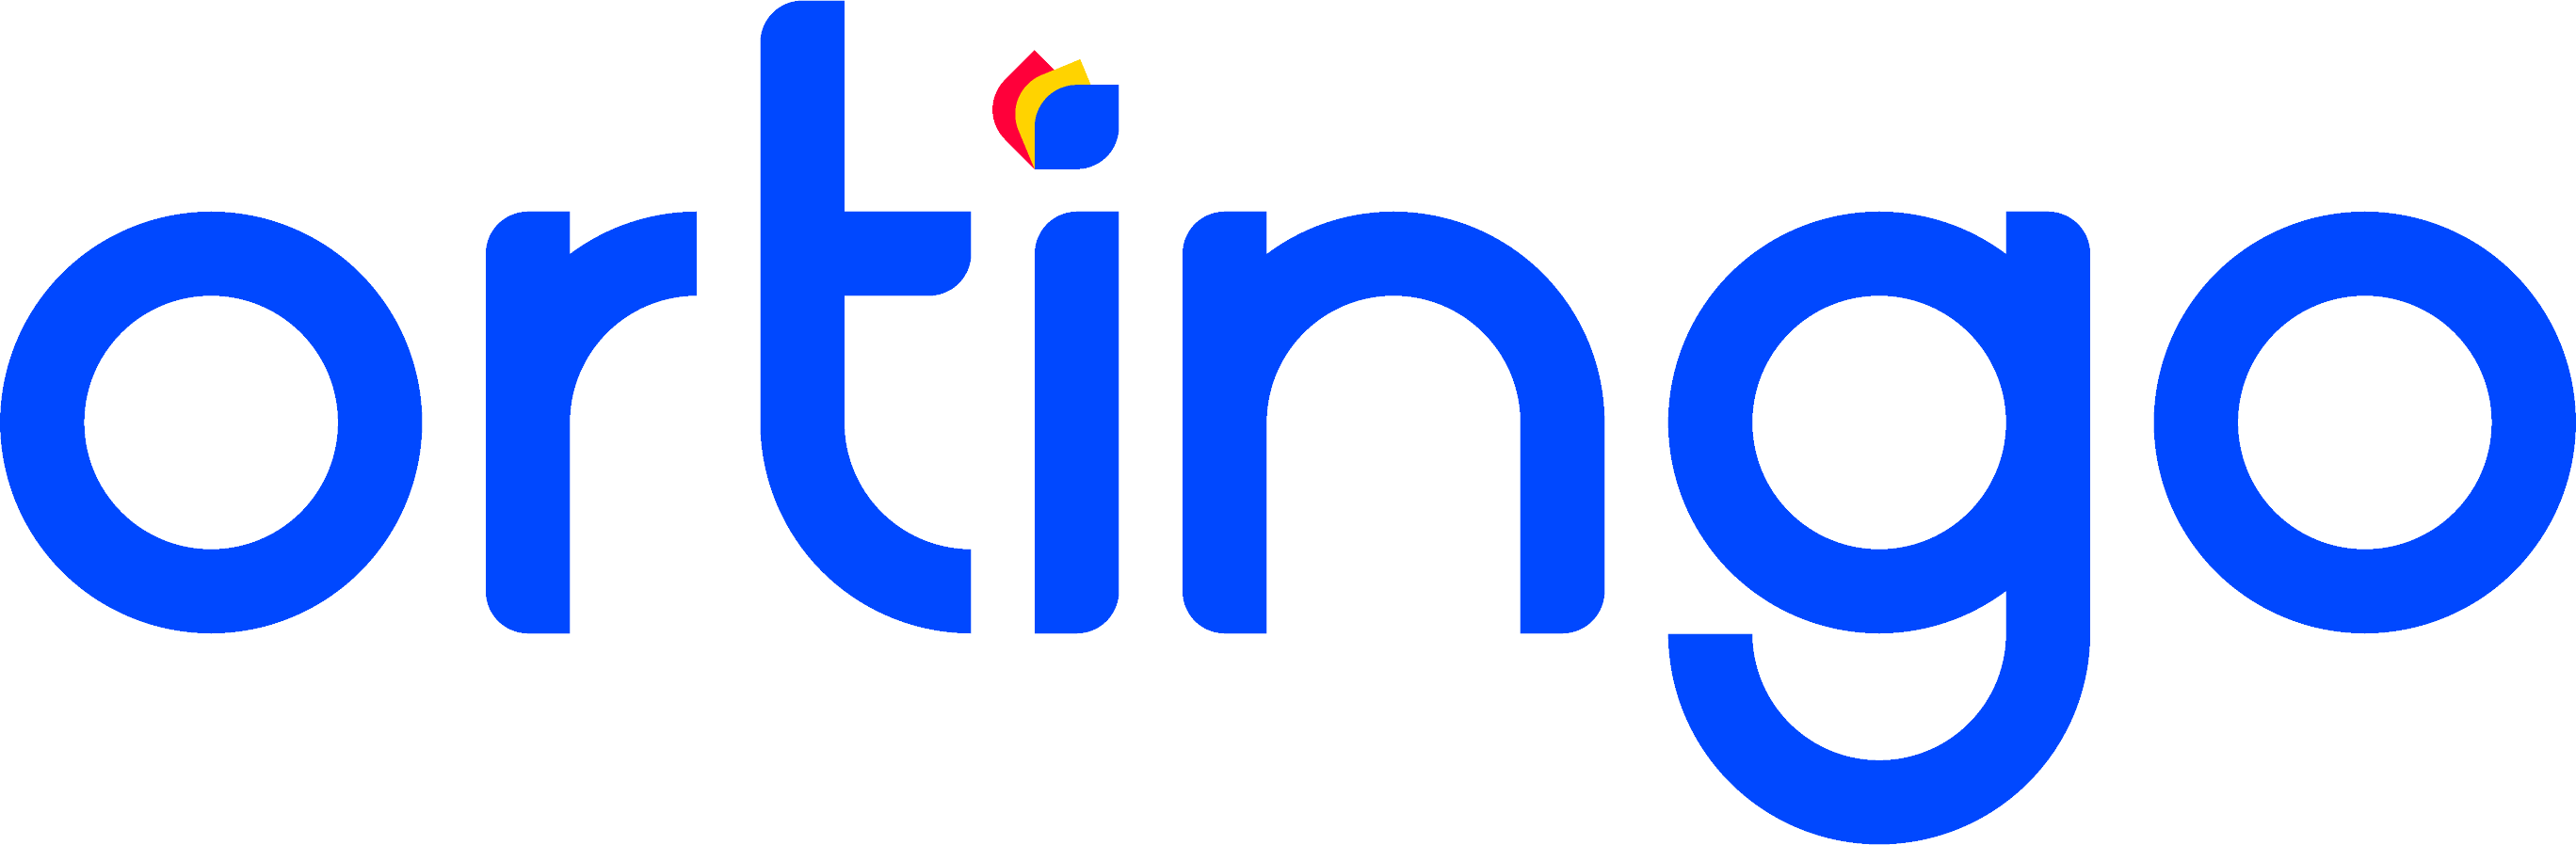 Ortingo logo